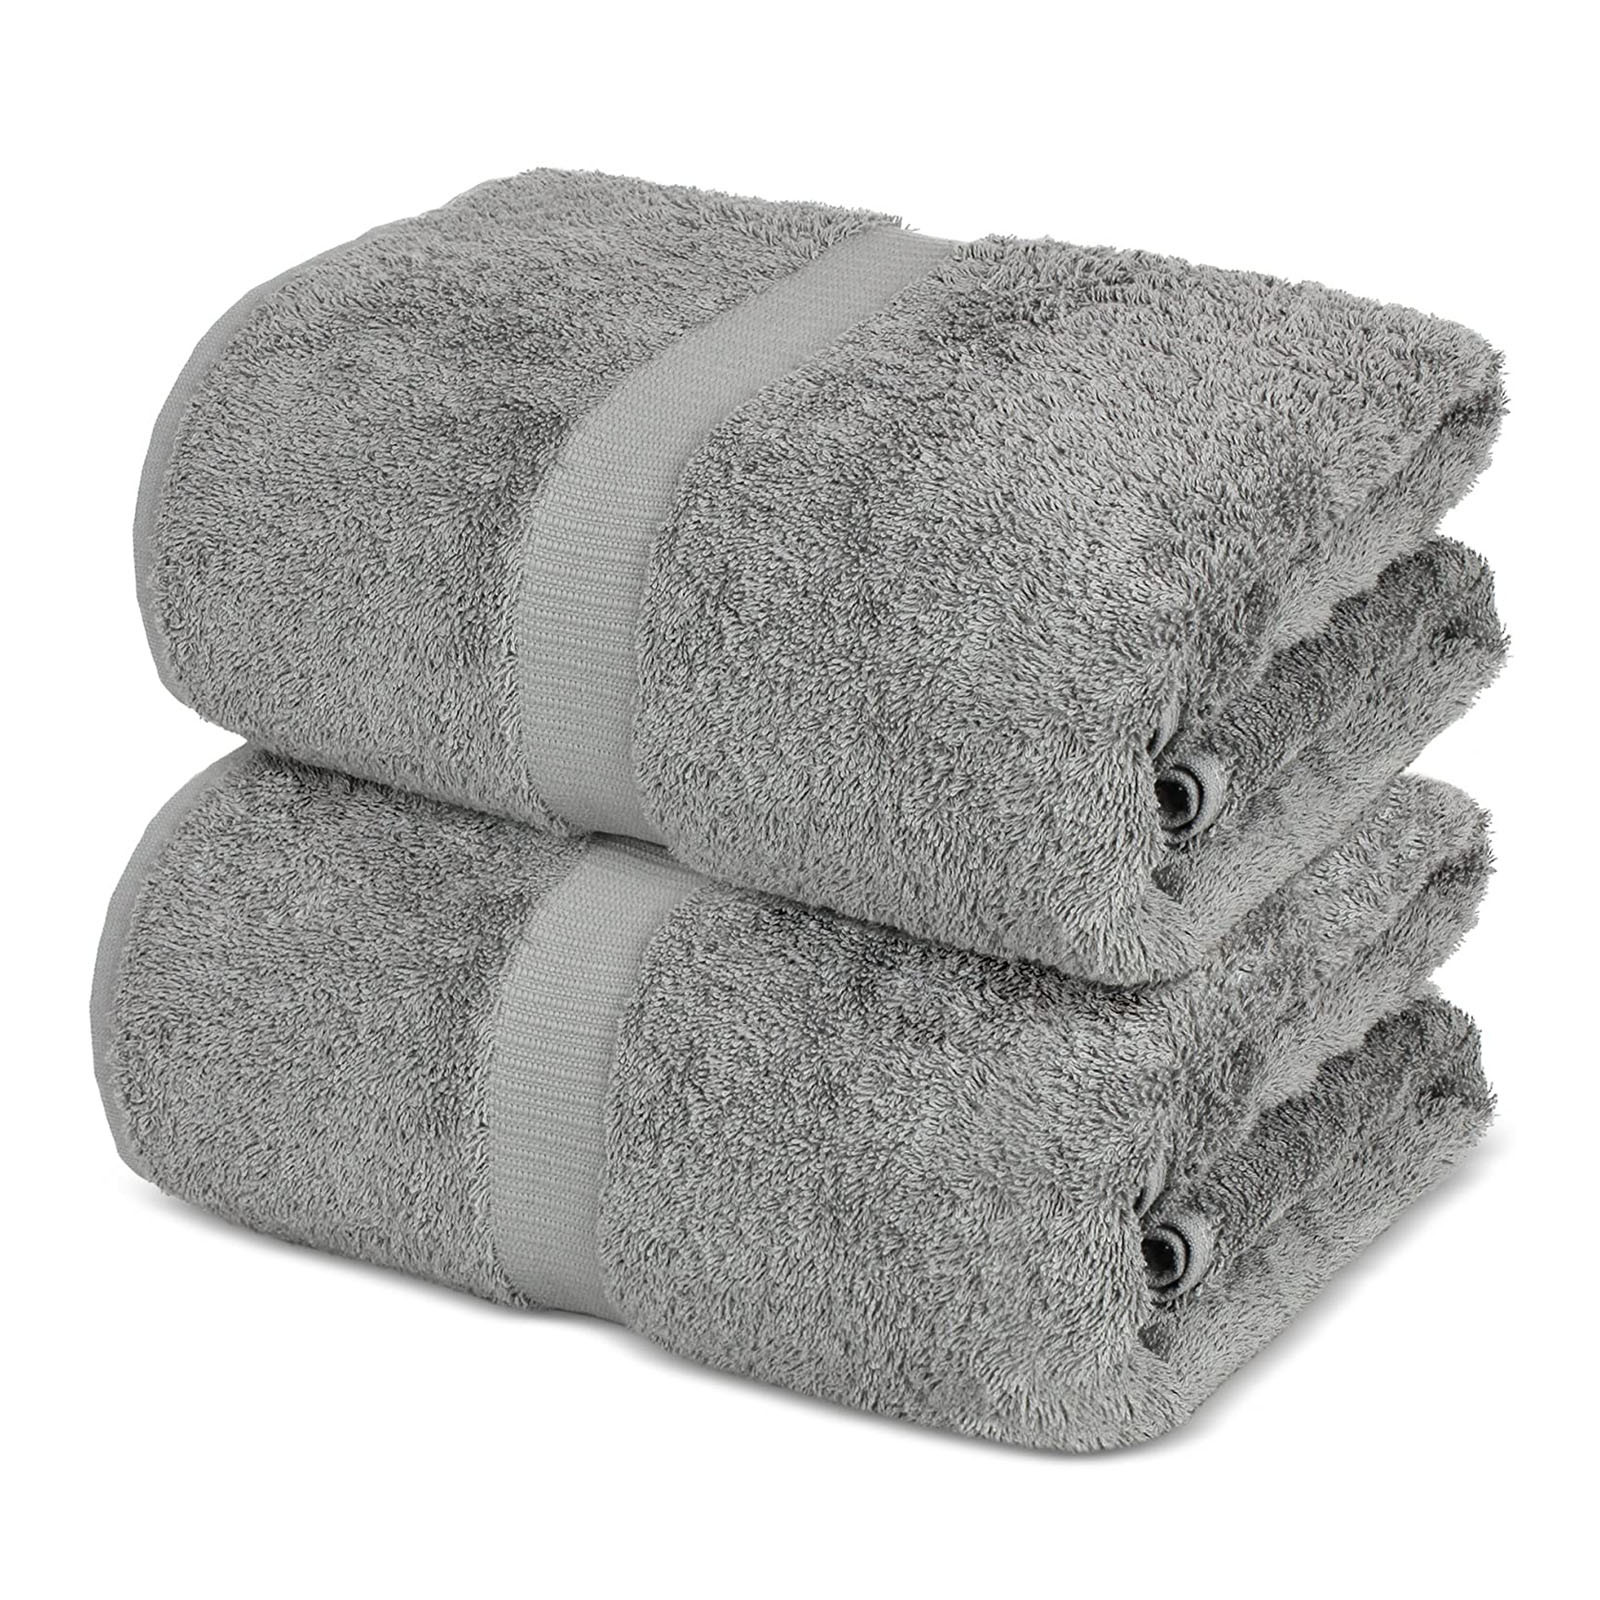 40#Towel 100% Turkish Cotton Bath Sheets 700 GSM 35 x 70 Inch Eco-Friendly Luxury Bath Adults Towels for Beach Home Bathroom